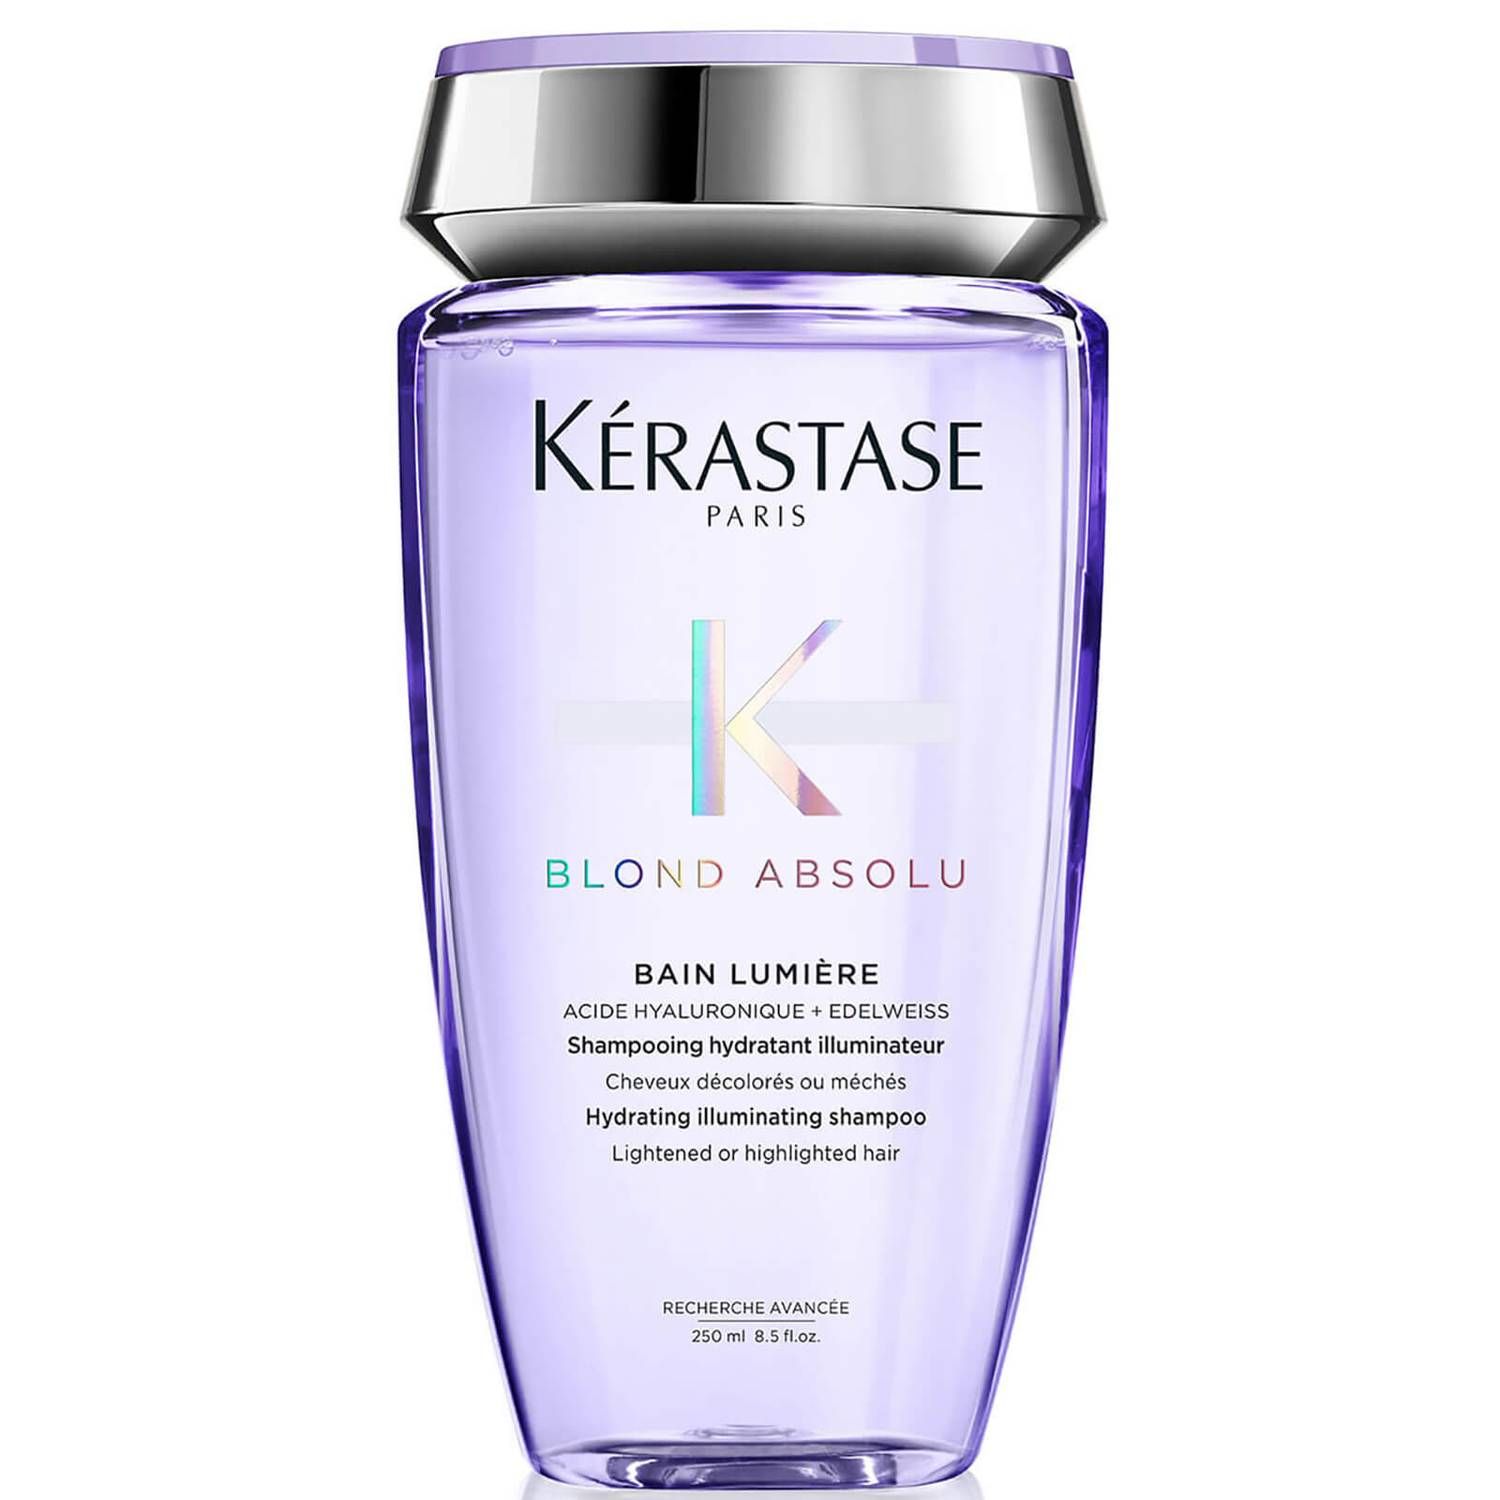 Kérastase Blond Absolu Bain Lumiere Shampoo 250ml | Look Fantastic (UK)